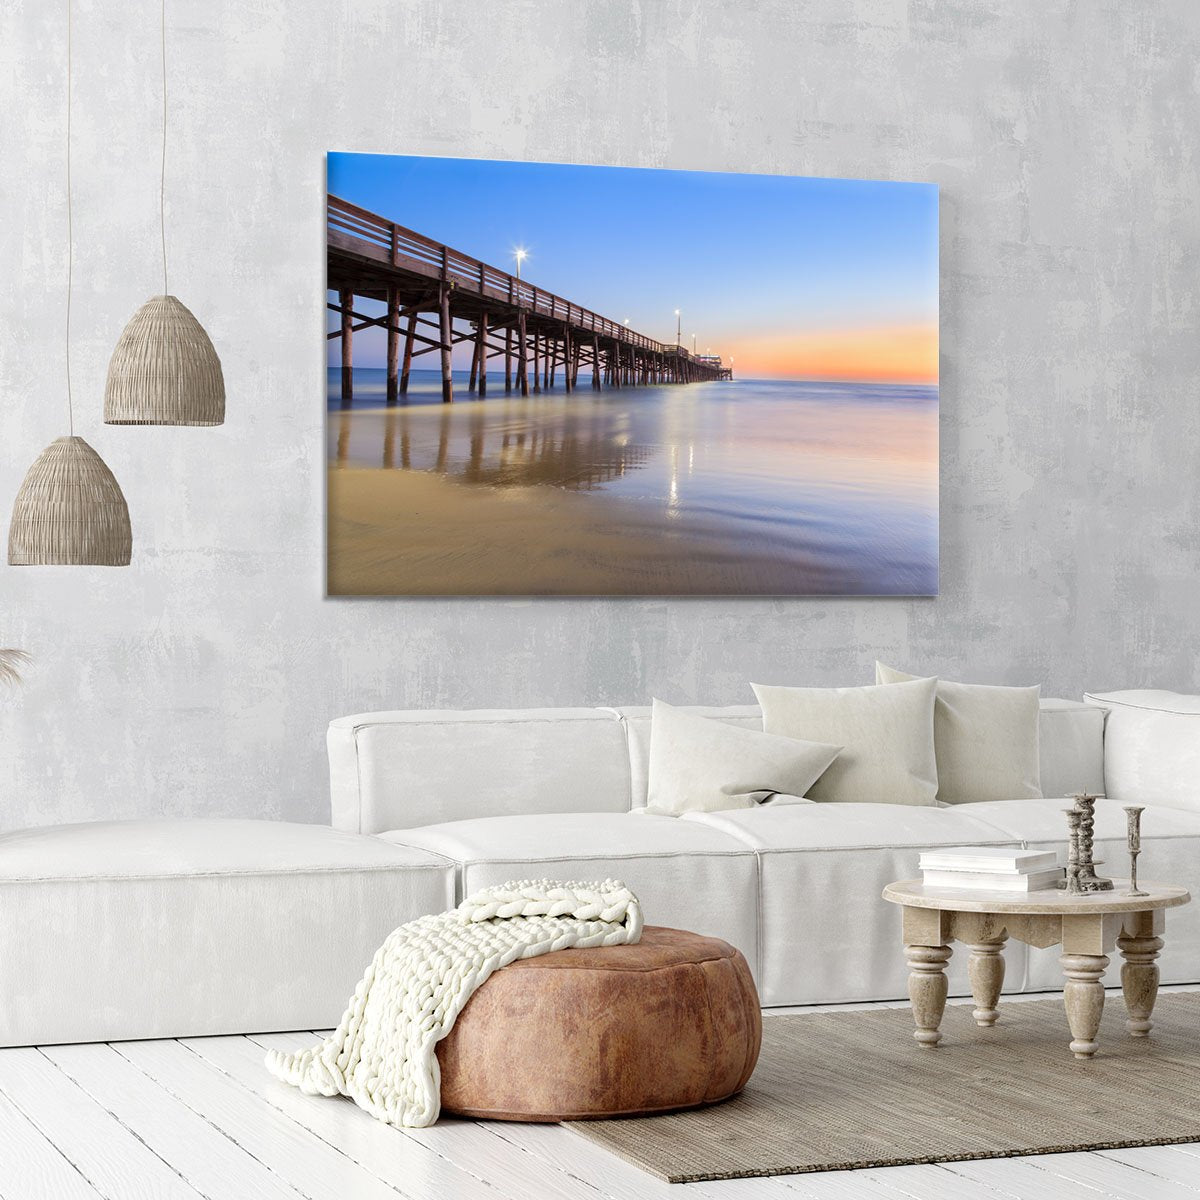 Newport Beach pier after sunset Canvas Print or Poster